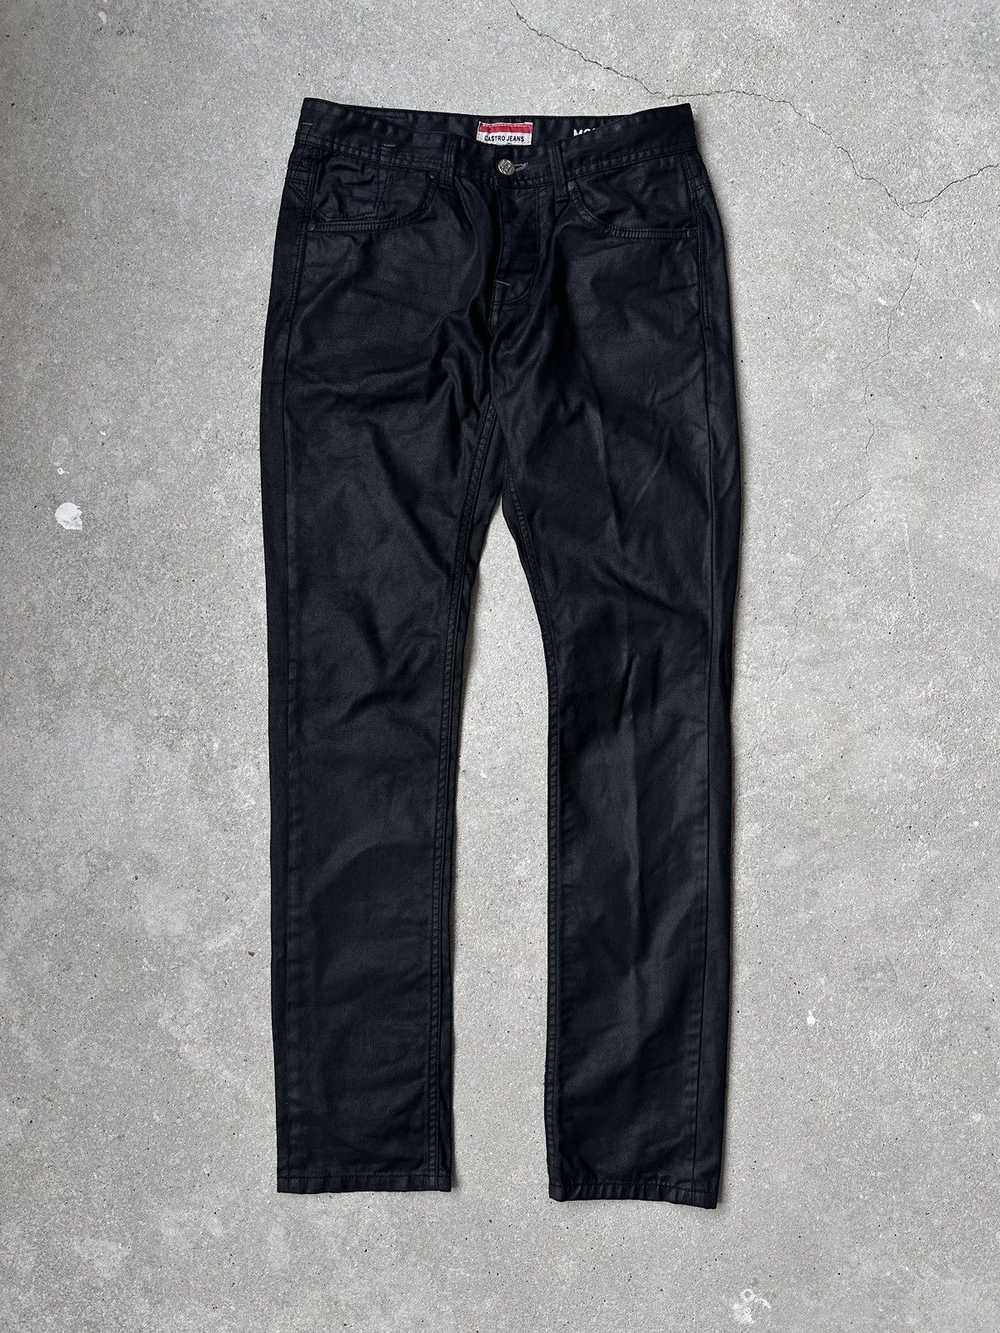 Japanese Brand Japanese Brand Skinny Waxed Jeans - image 4